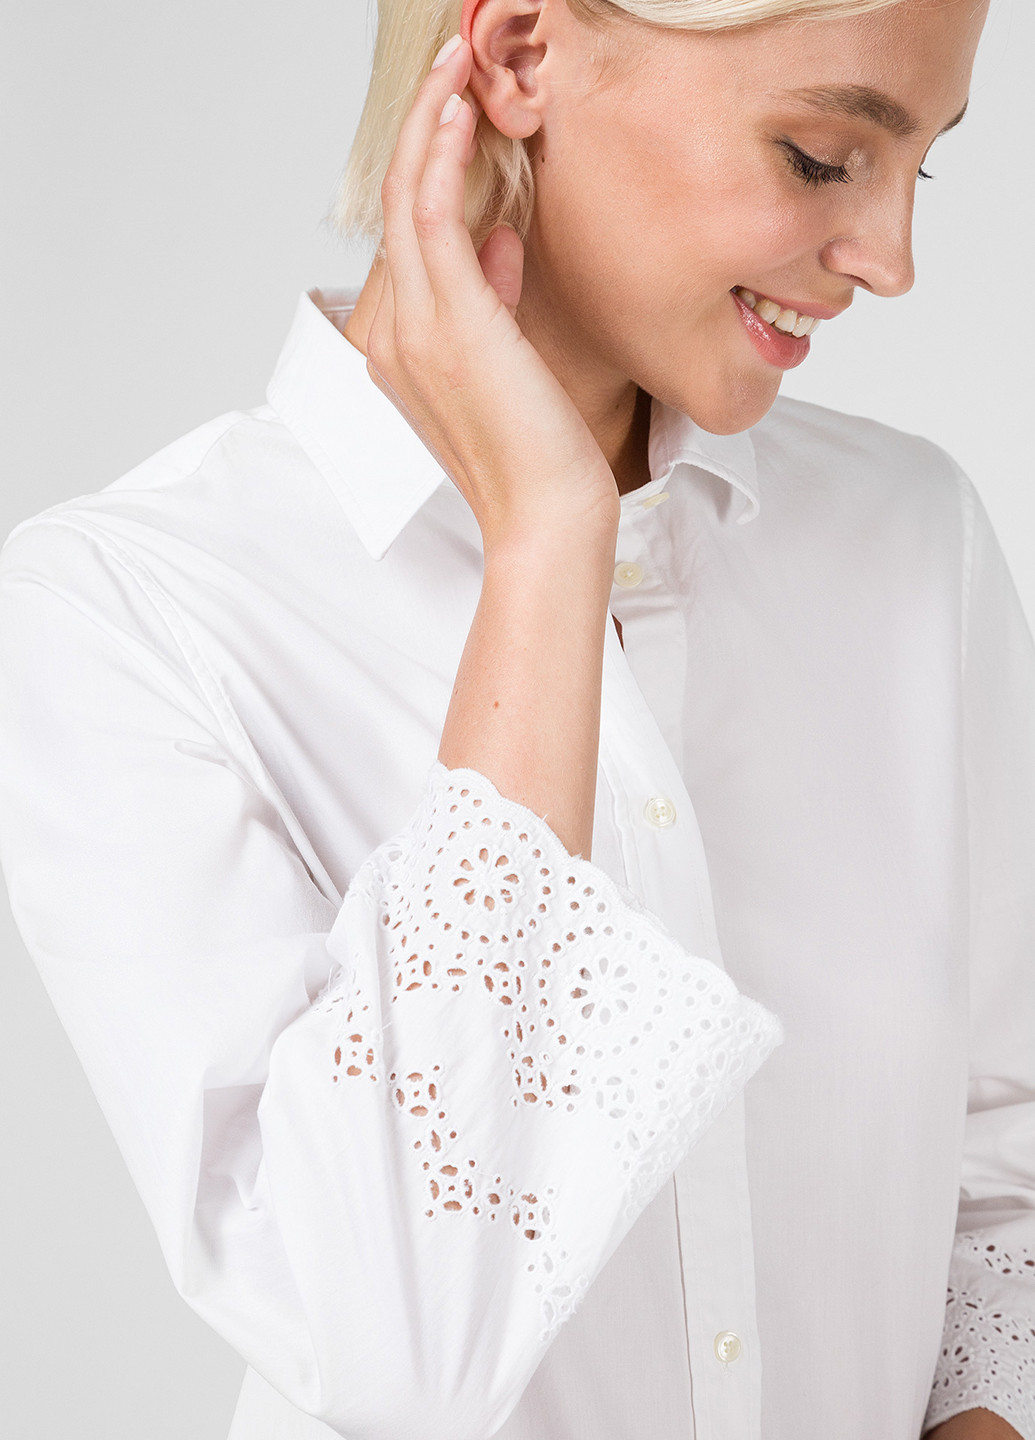 Белая кэжуал рубашка однотонная Gant